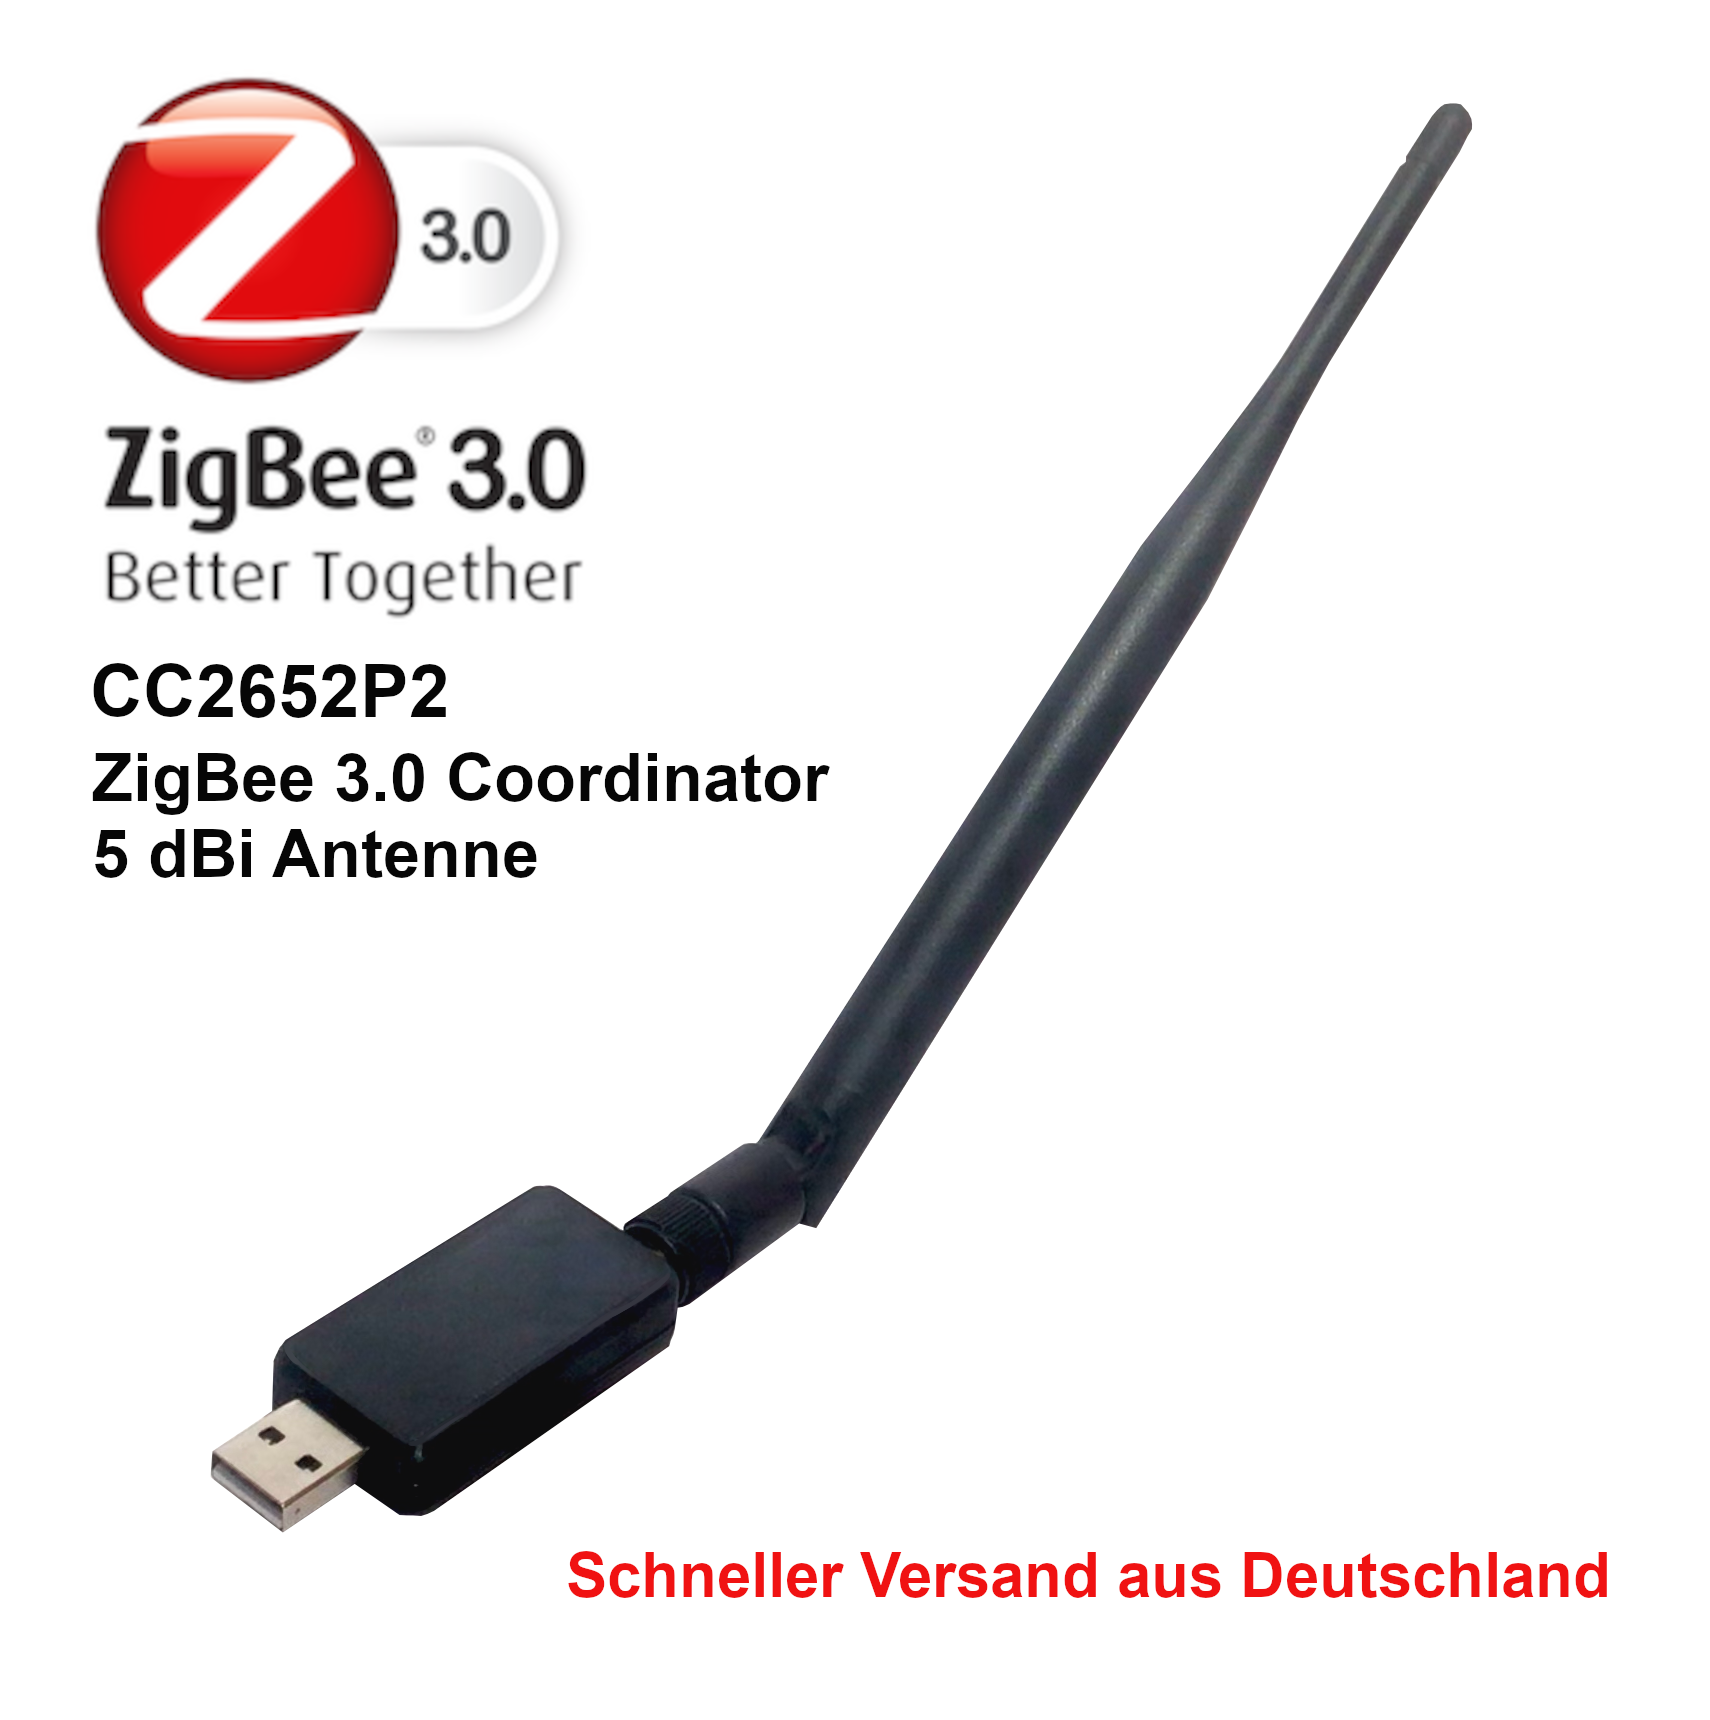 Прошить стик. USB ZIGBEE стик cc2652. USB ZIGBEE стик cc2652 Прошивка. Cc2652p2. Зигби 3.0 с USB C.